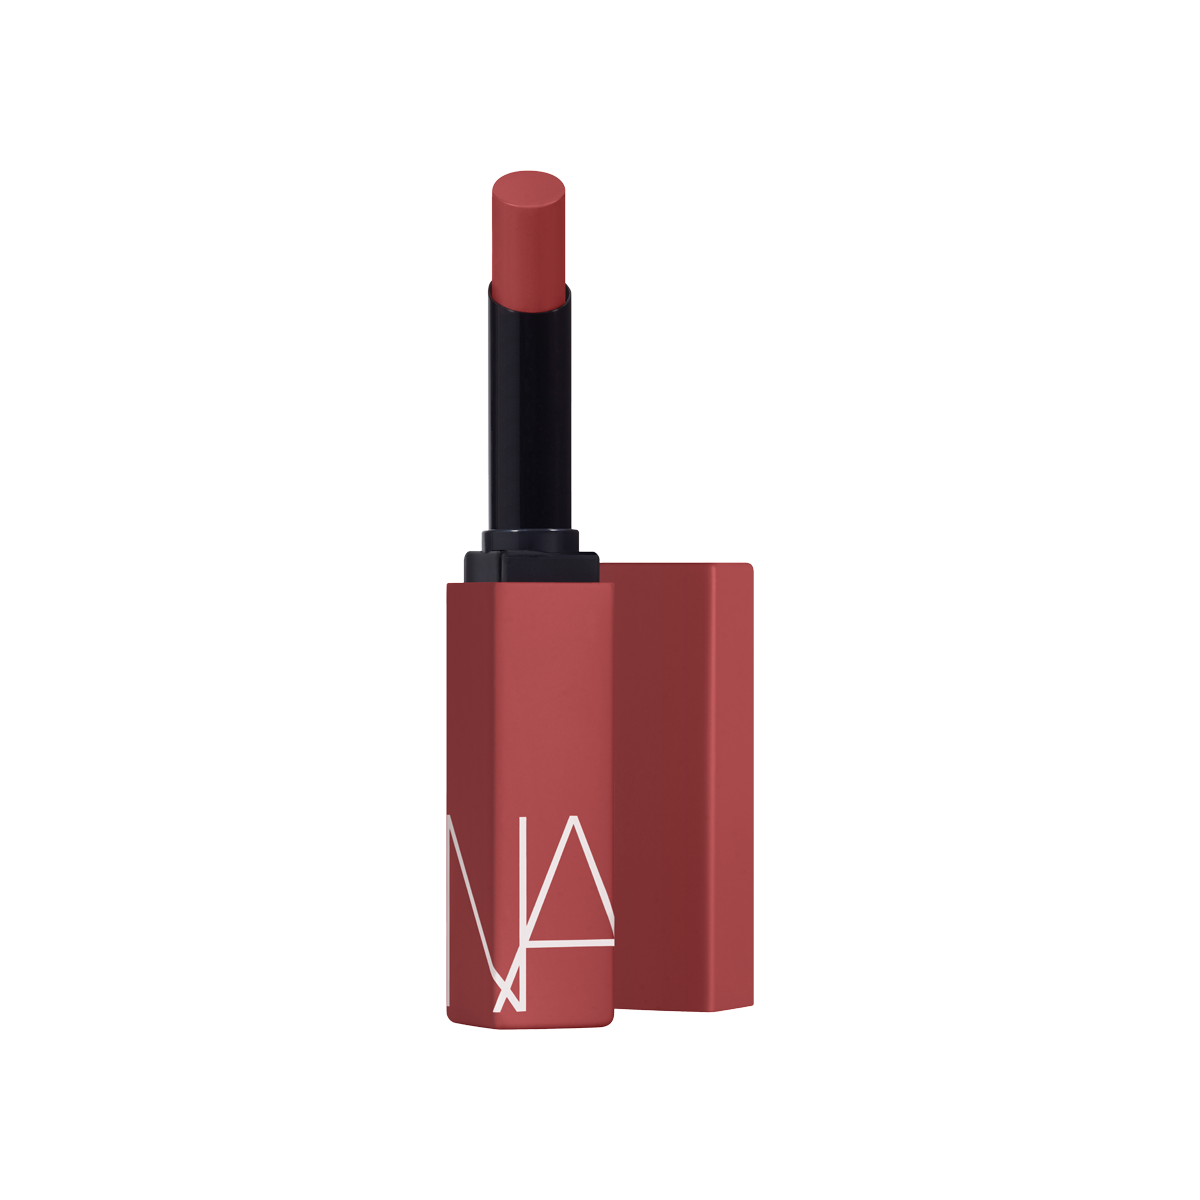 NARS - Powermatte High Intensity Lipstick